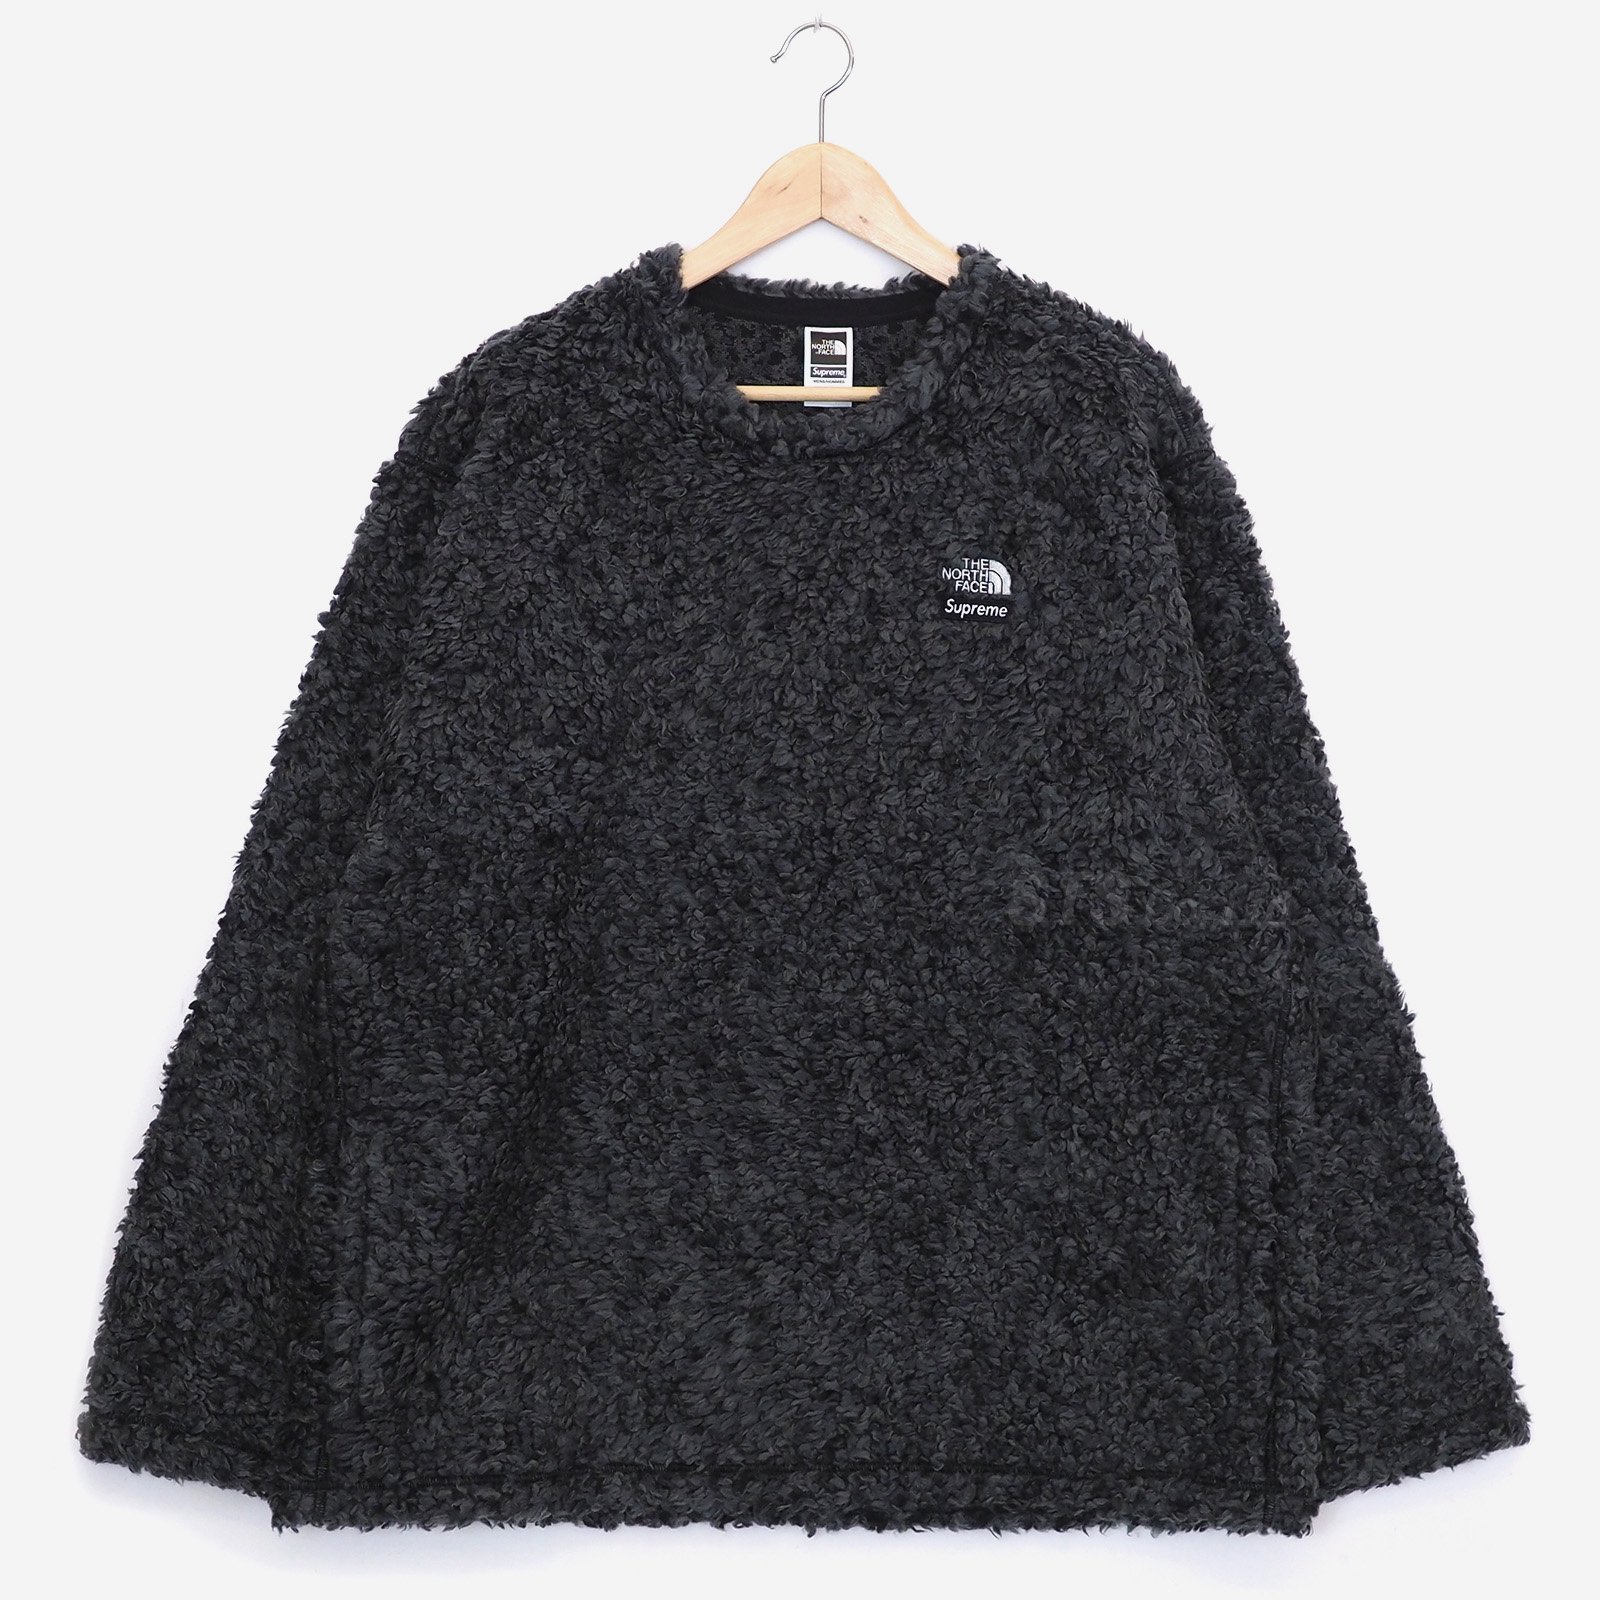 Supreme/The North Face High Pile Fleece Pullover - ParkSIDER